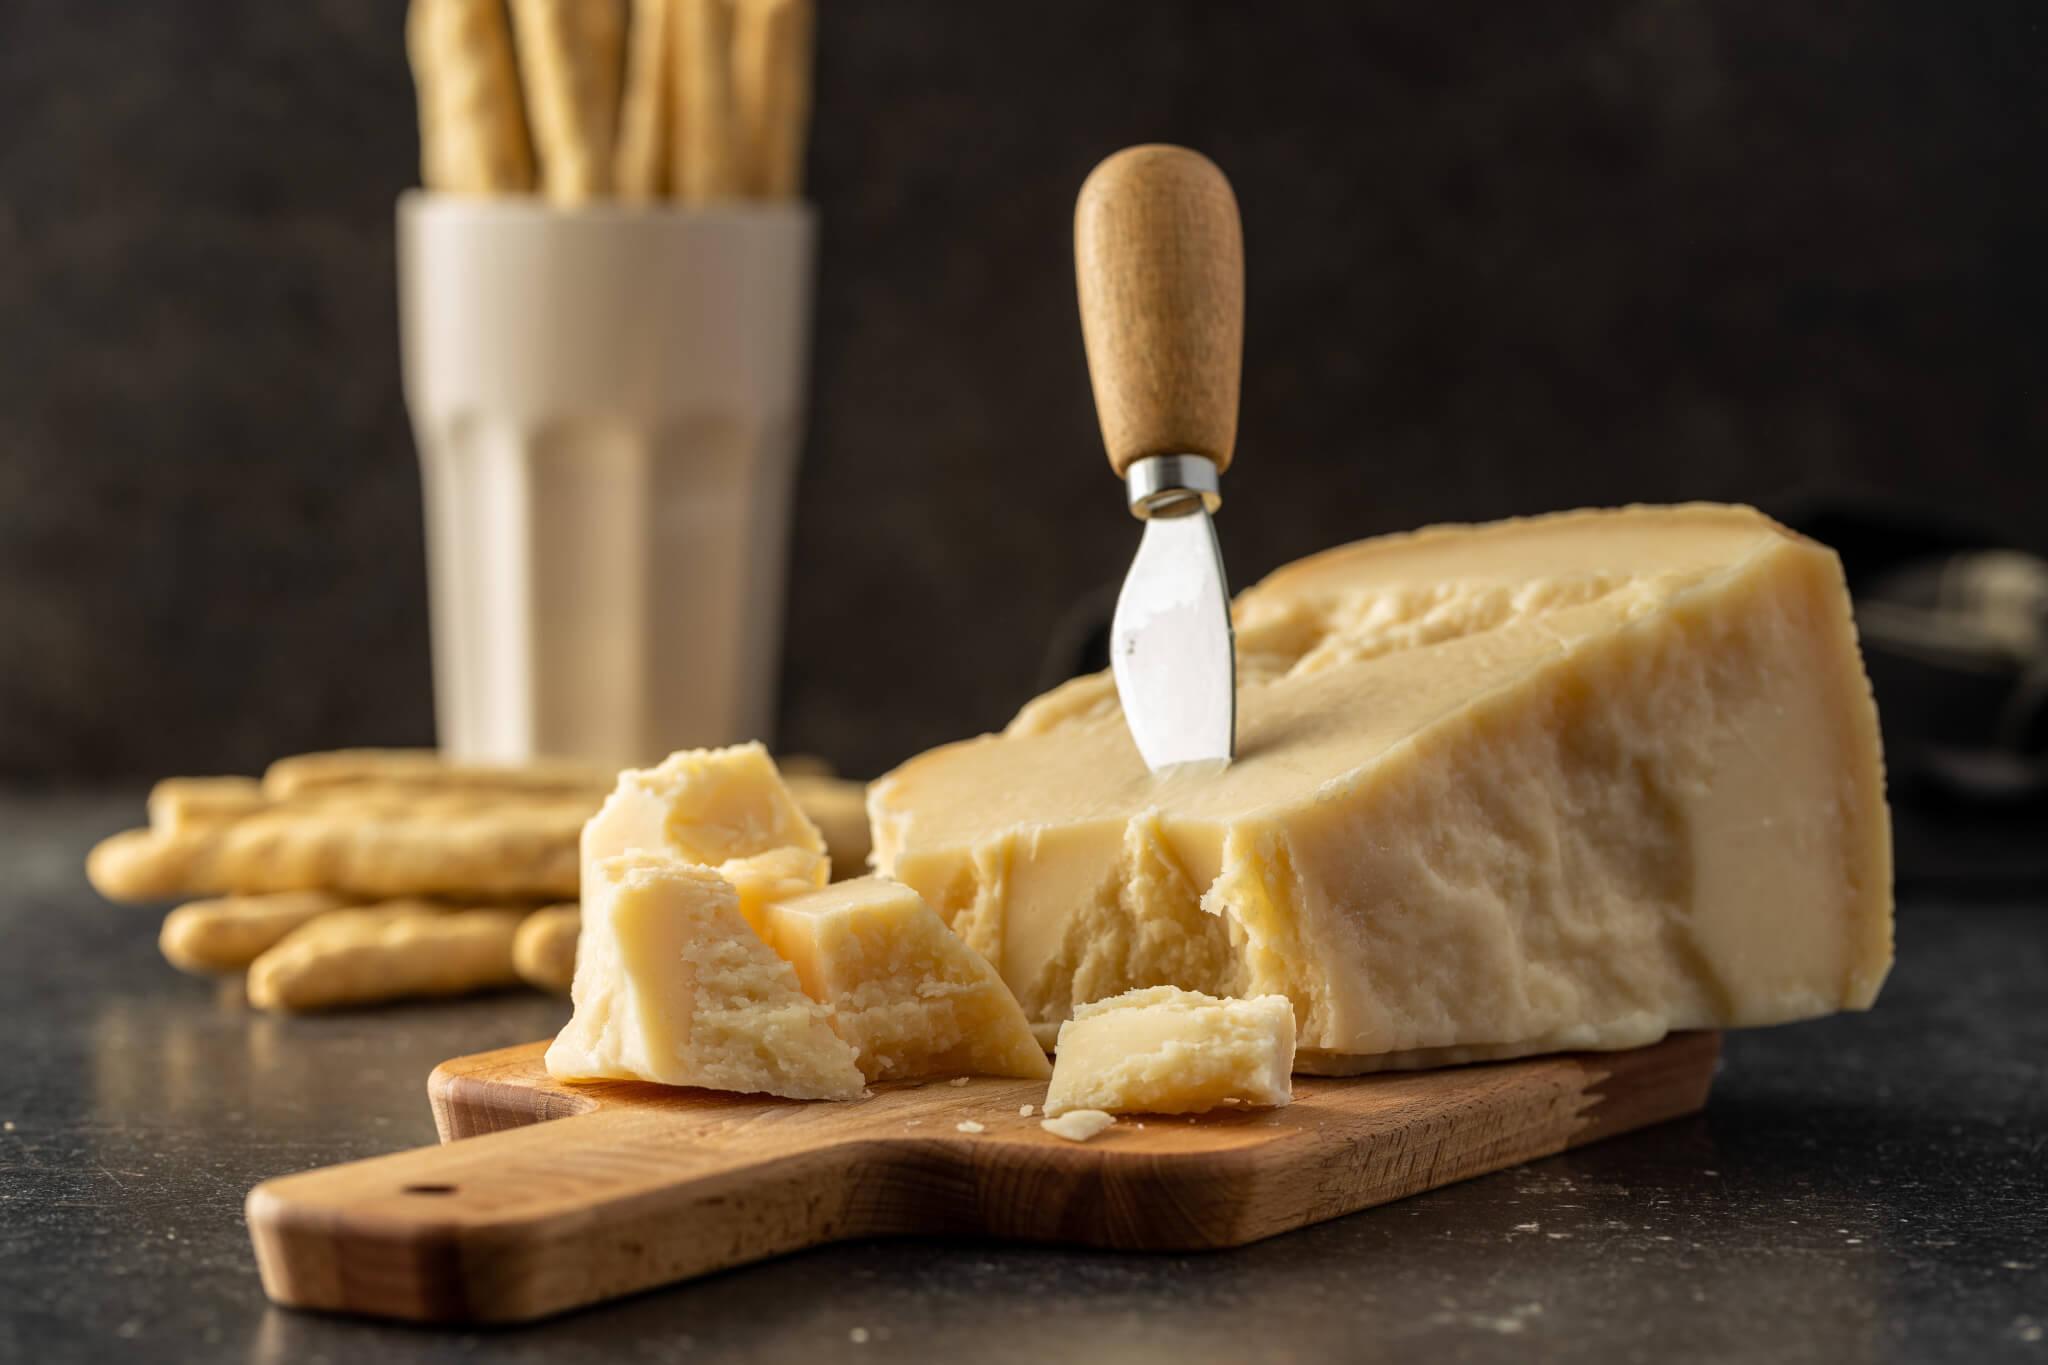 https://www.daysoftheyear.com/wp-content/uploads/pieces-of-italian-parmesan-cheese-block-of-parmes-2021-09-04-16-27-13-utc.jpg